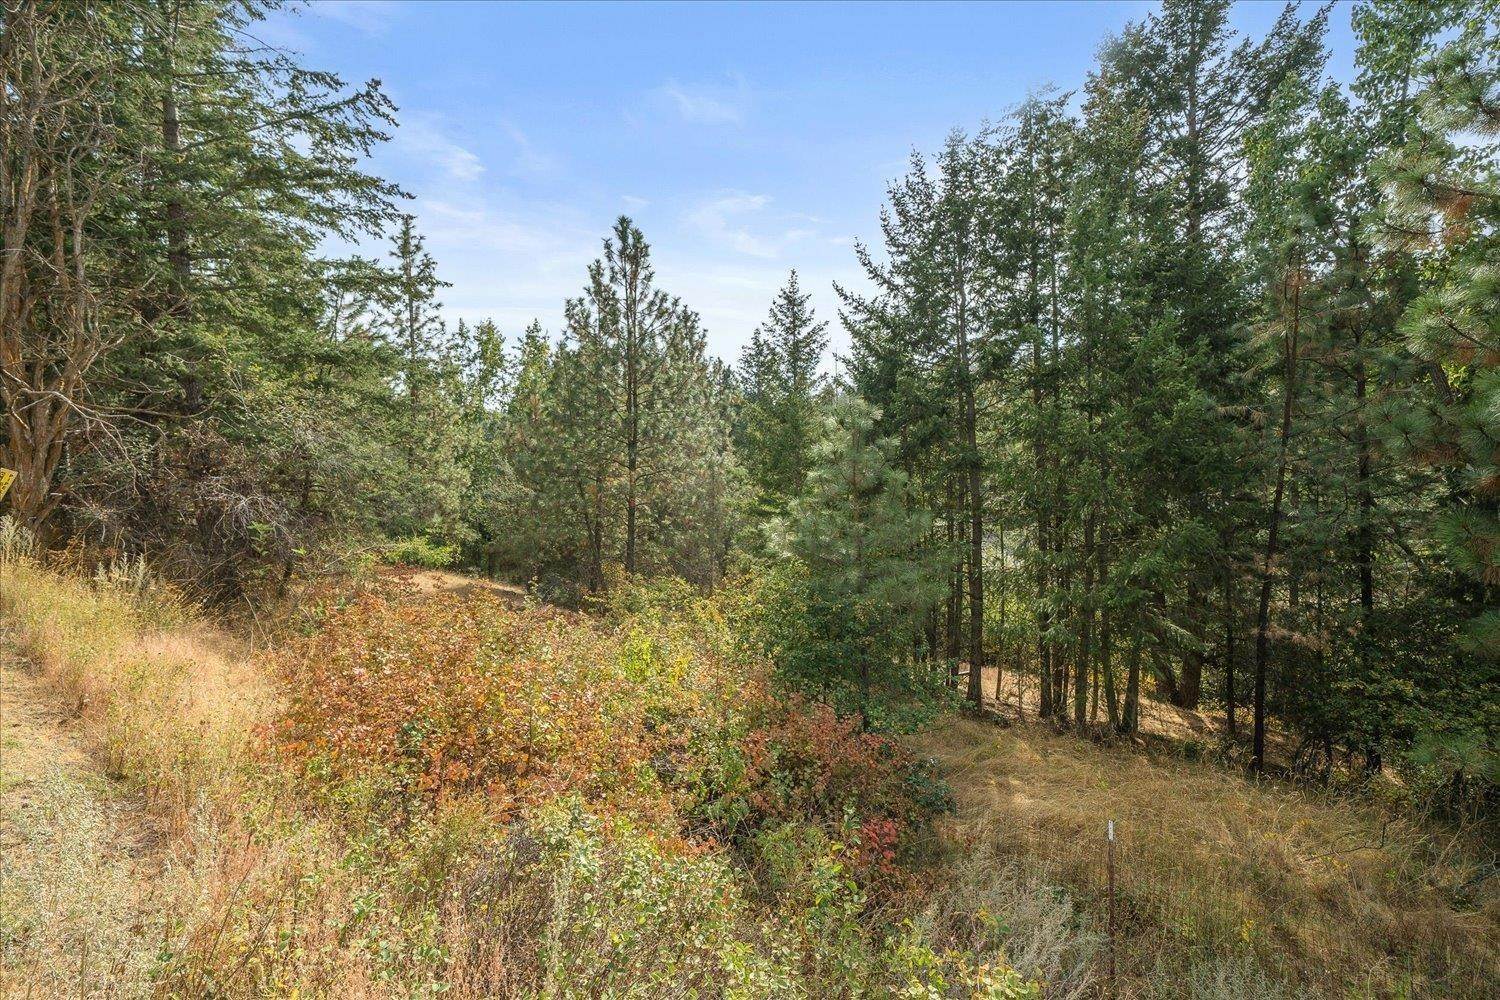 18. Land for Sale at Nka S Cree Road Spokane, Washington 99206 United States